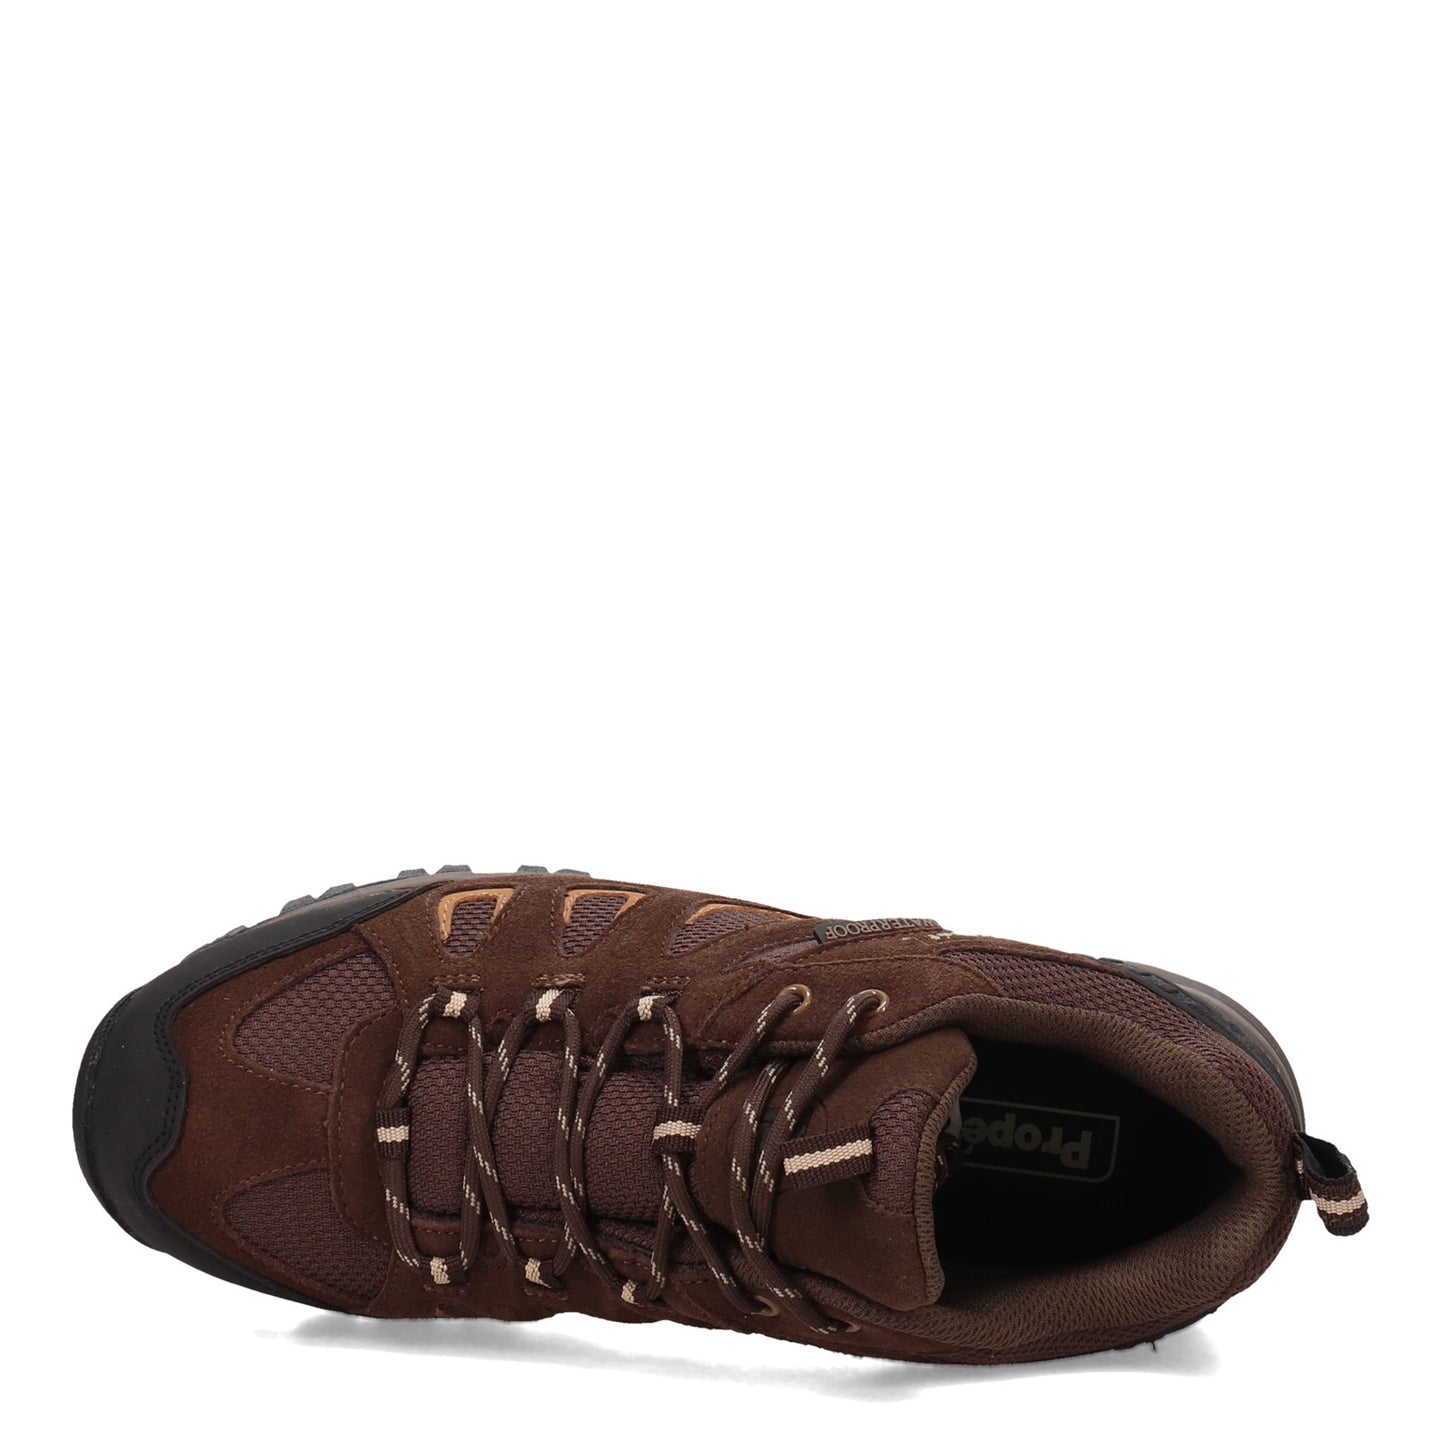 Peltz Shoes  Men's Propet Ridgewalker Low Hiking Shoe BROWN M3598-BR